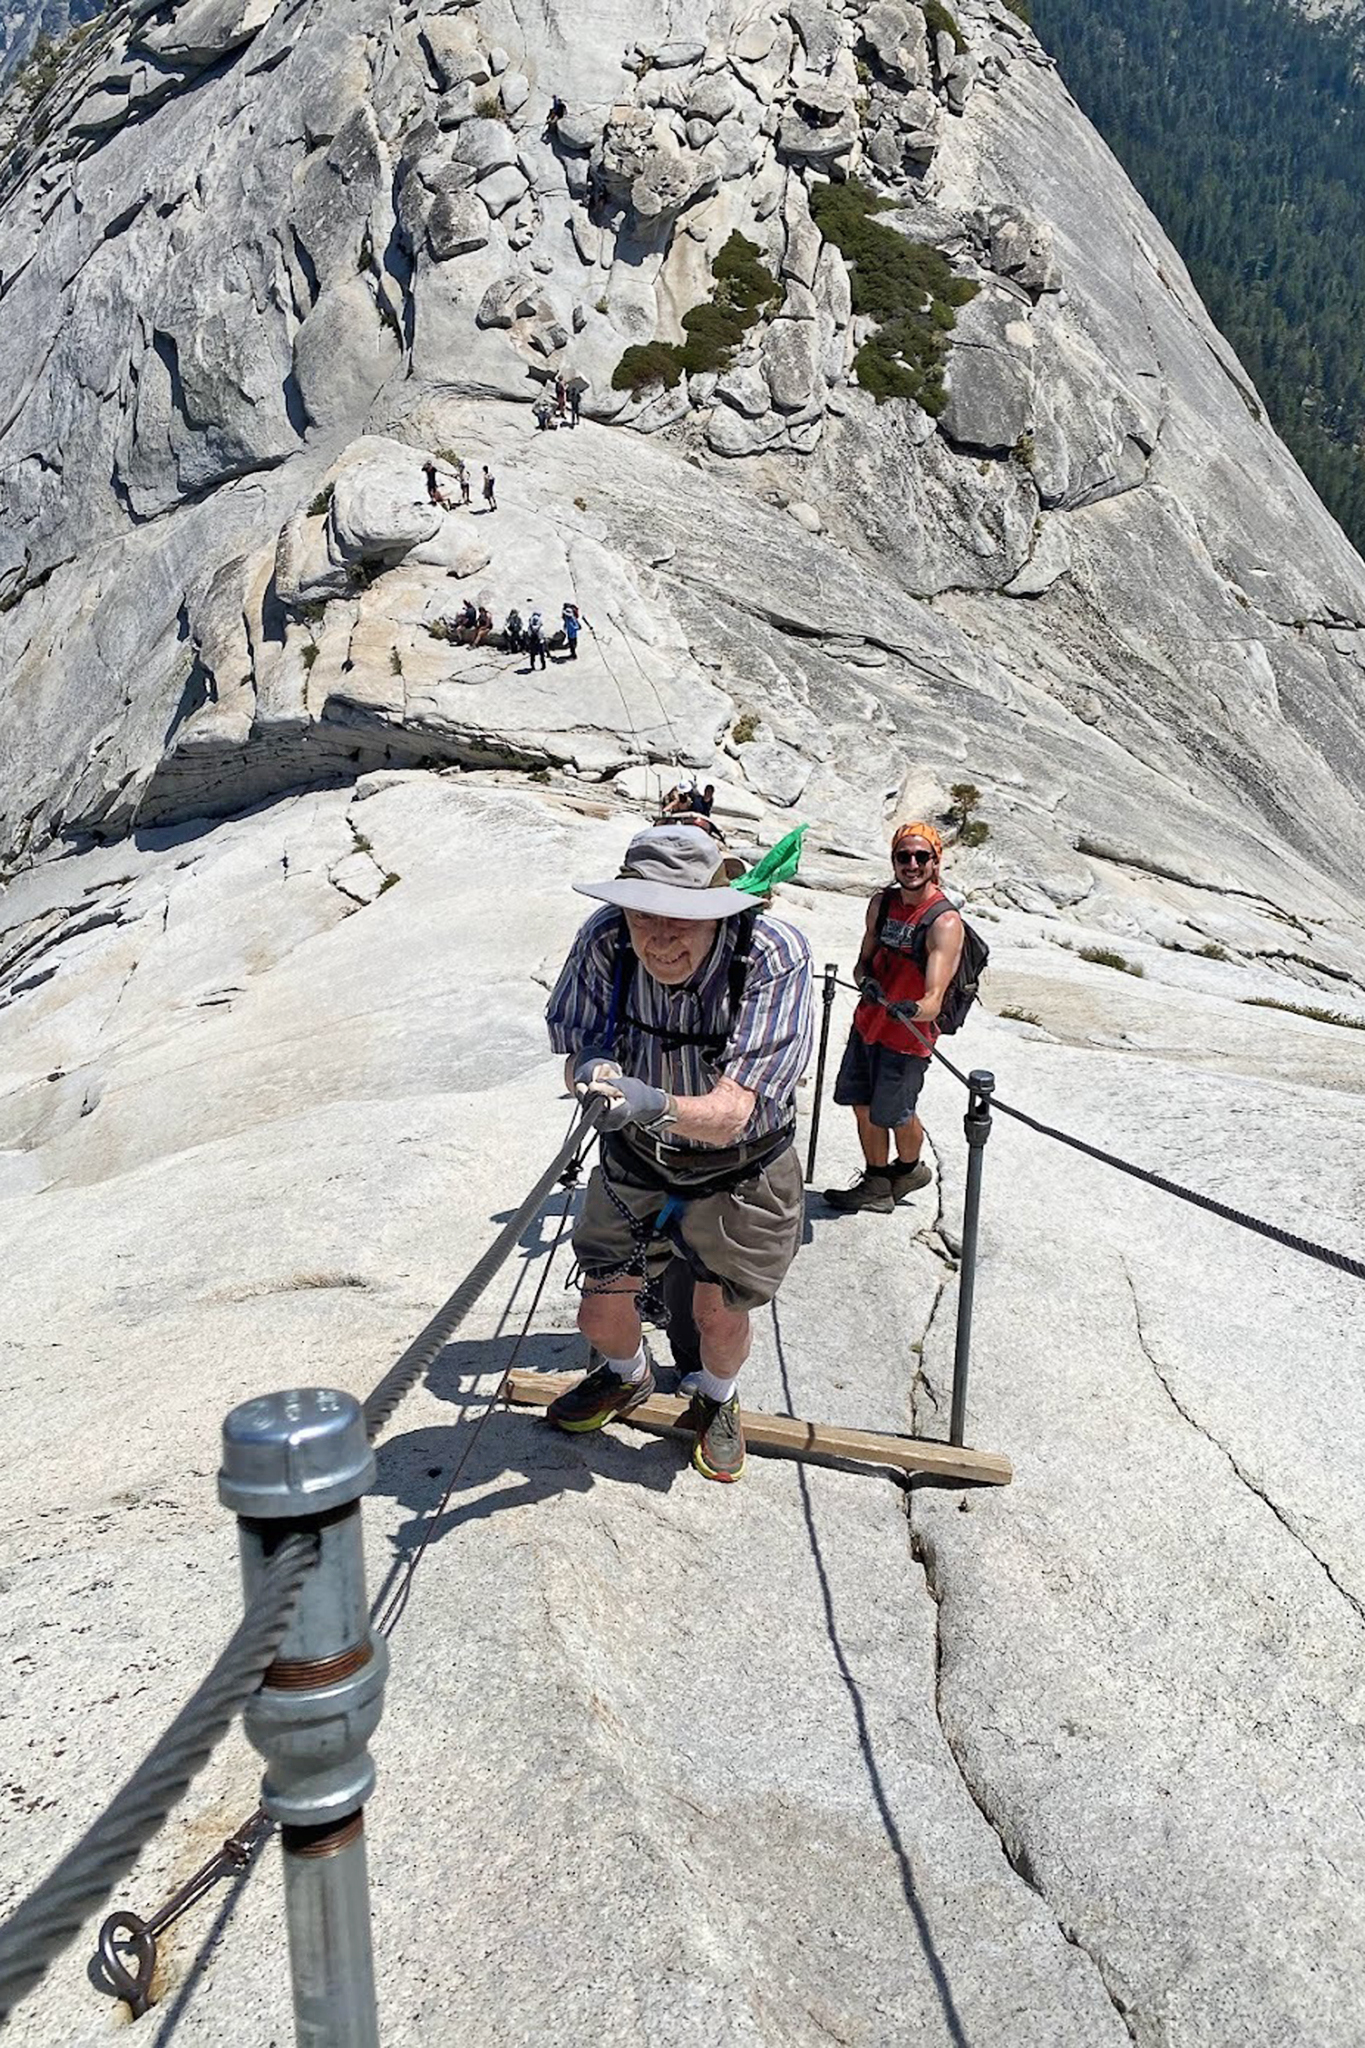 93-year-old summits Yosemite's Half Dome: 'It felt pretty good' - ABC News